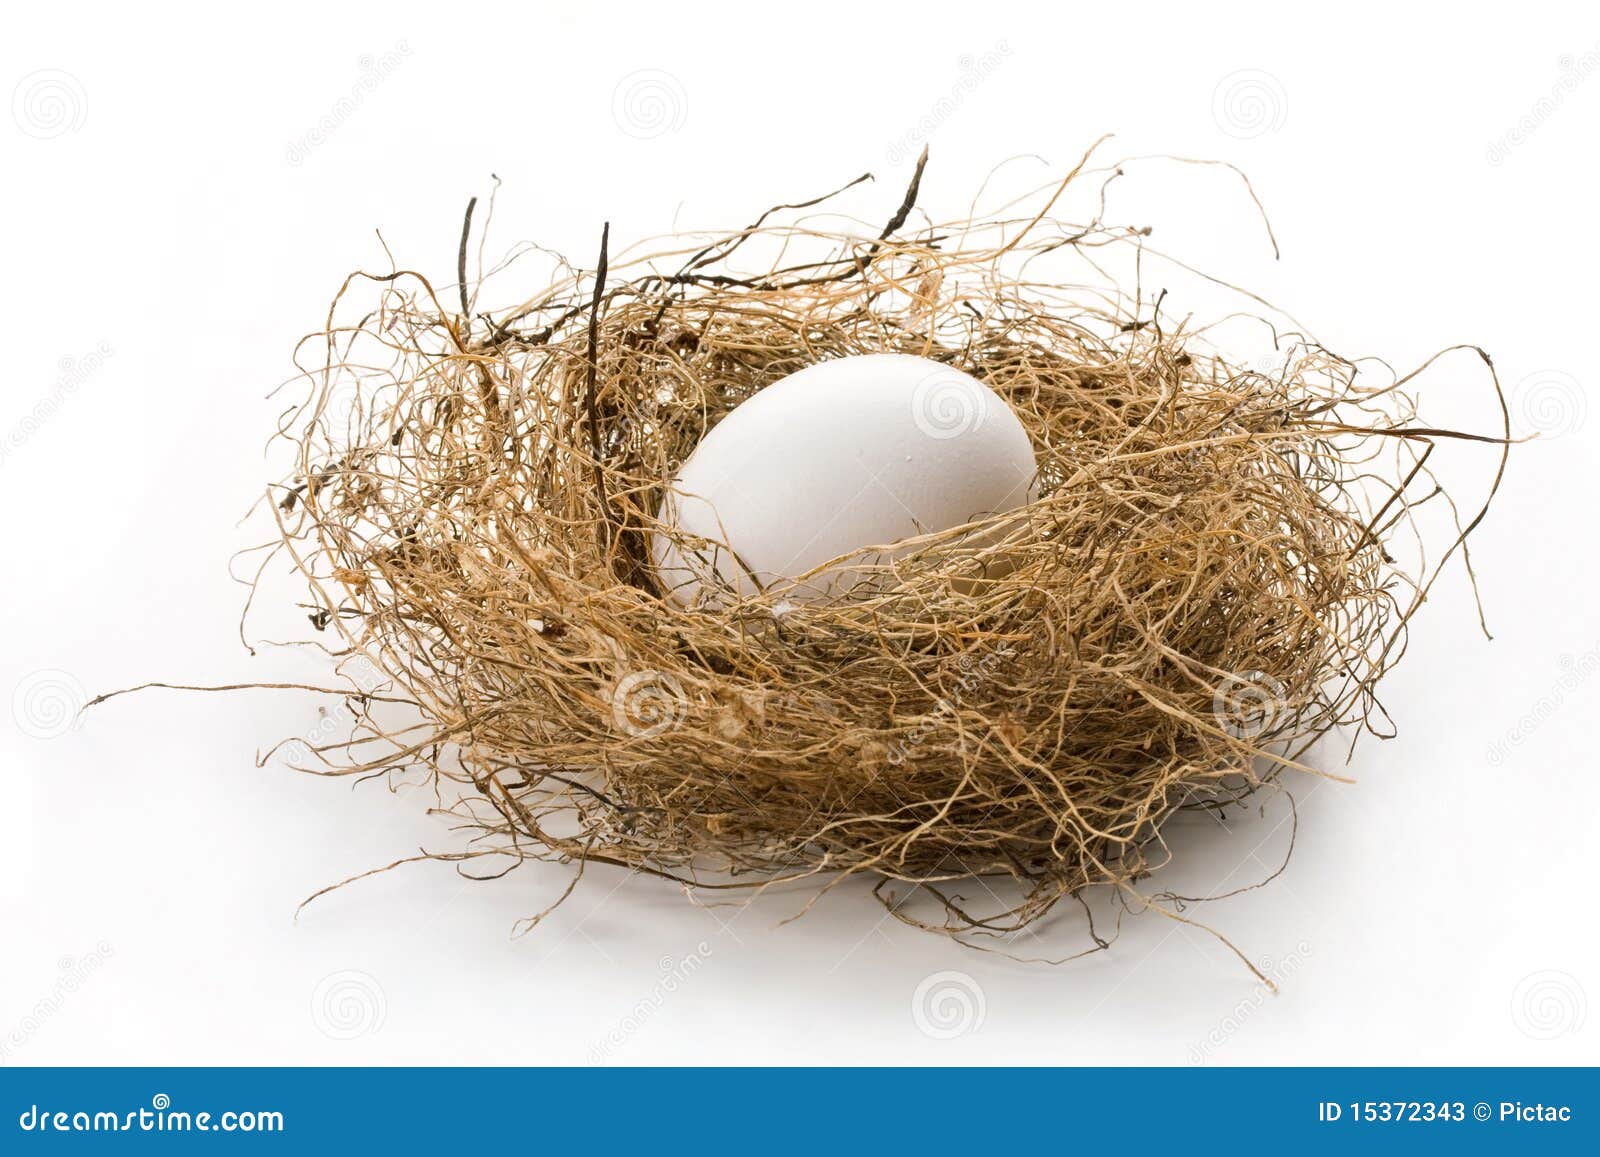 clipart birds nest eggs - photo #49